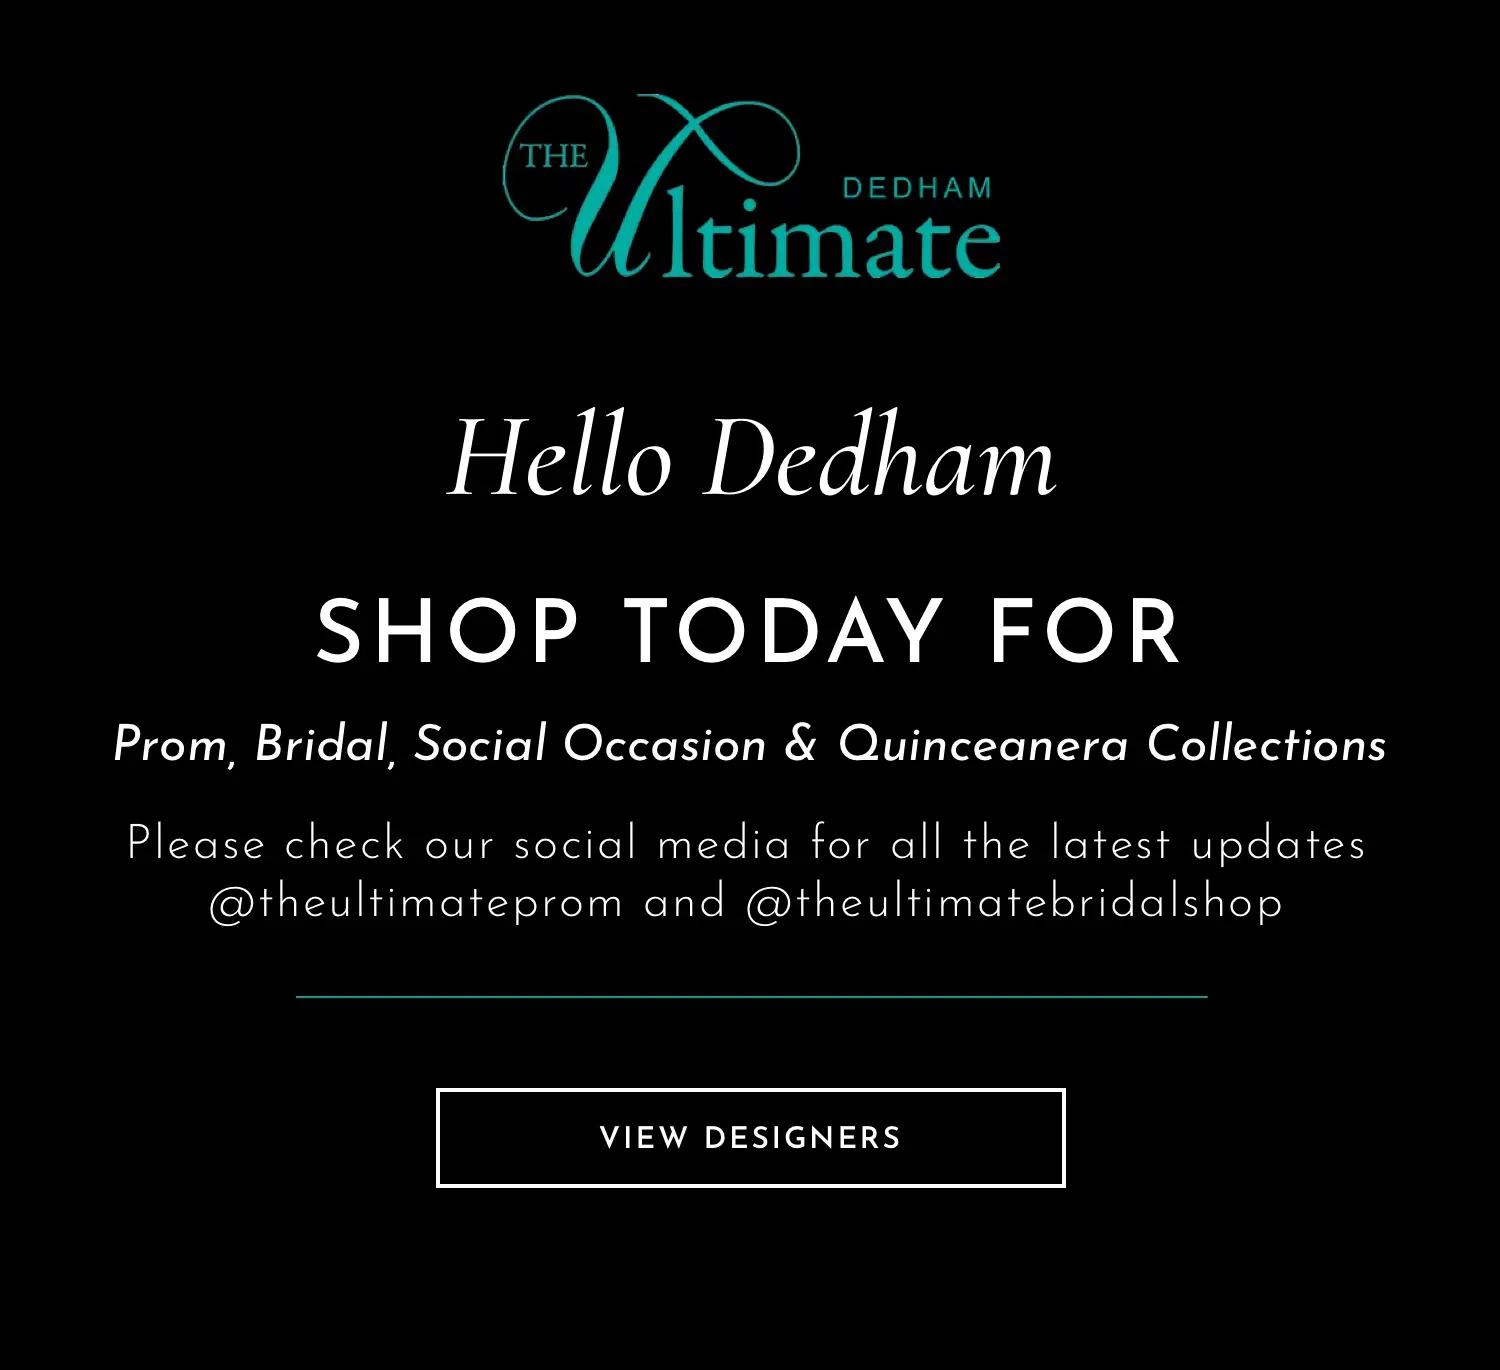 Dedham Location now open